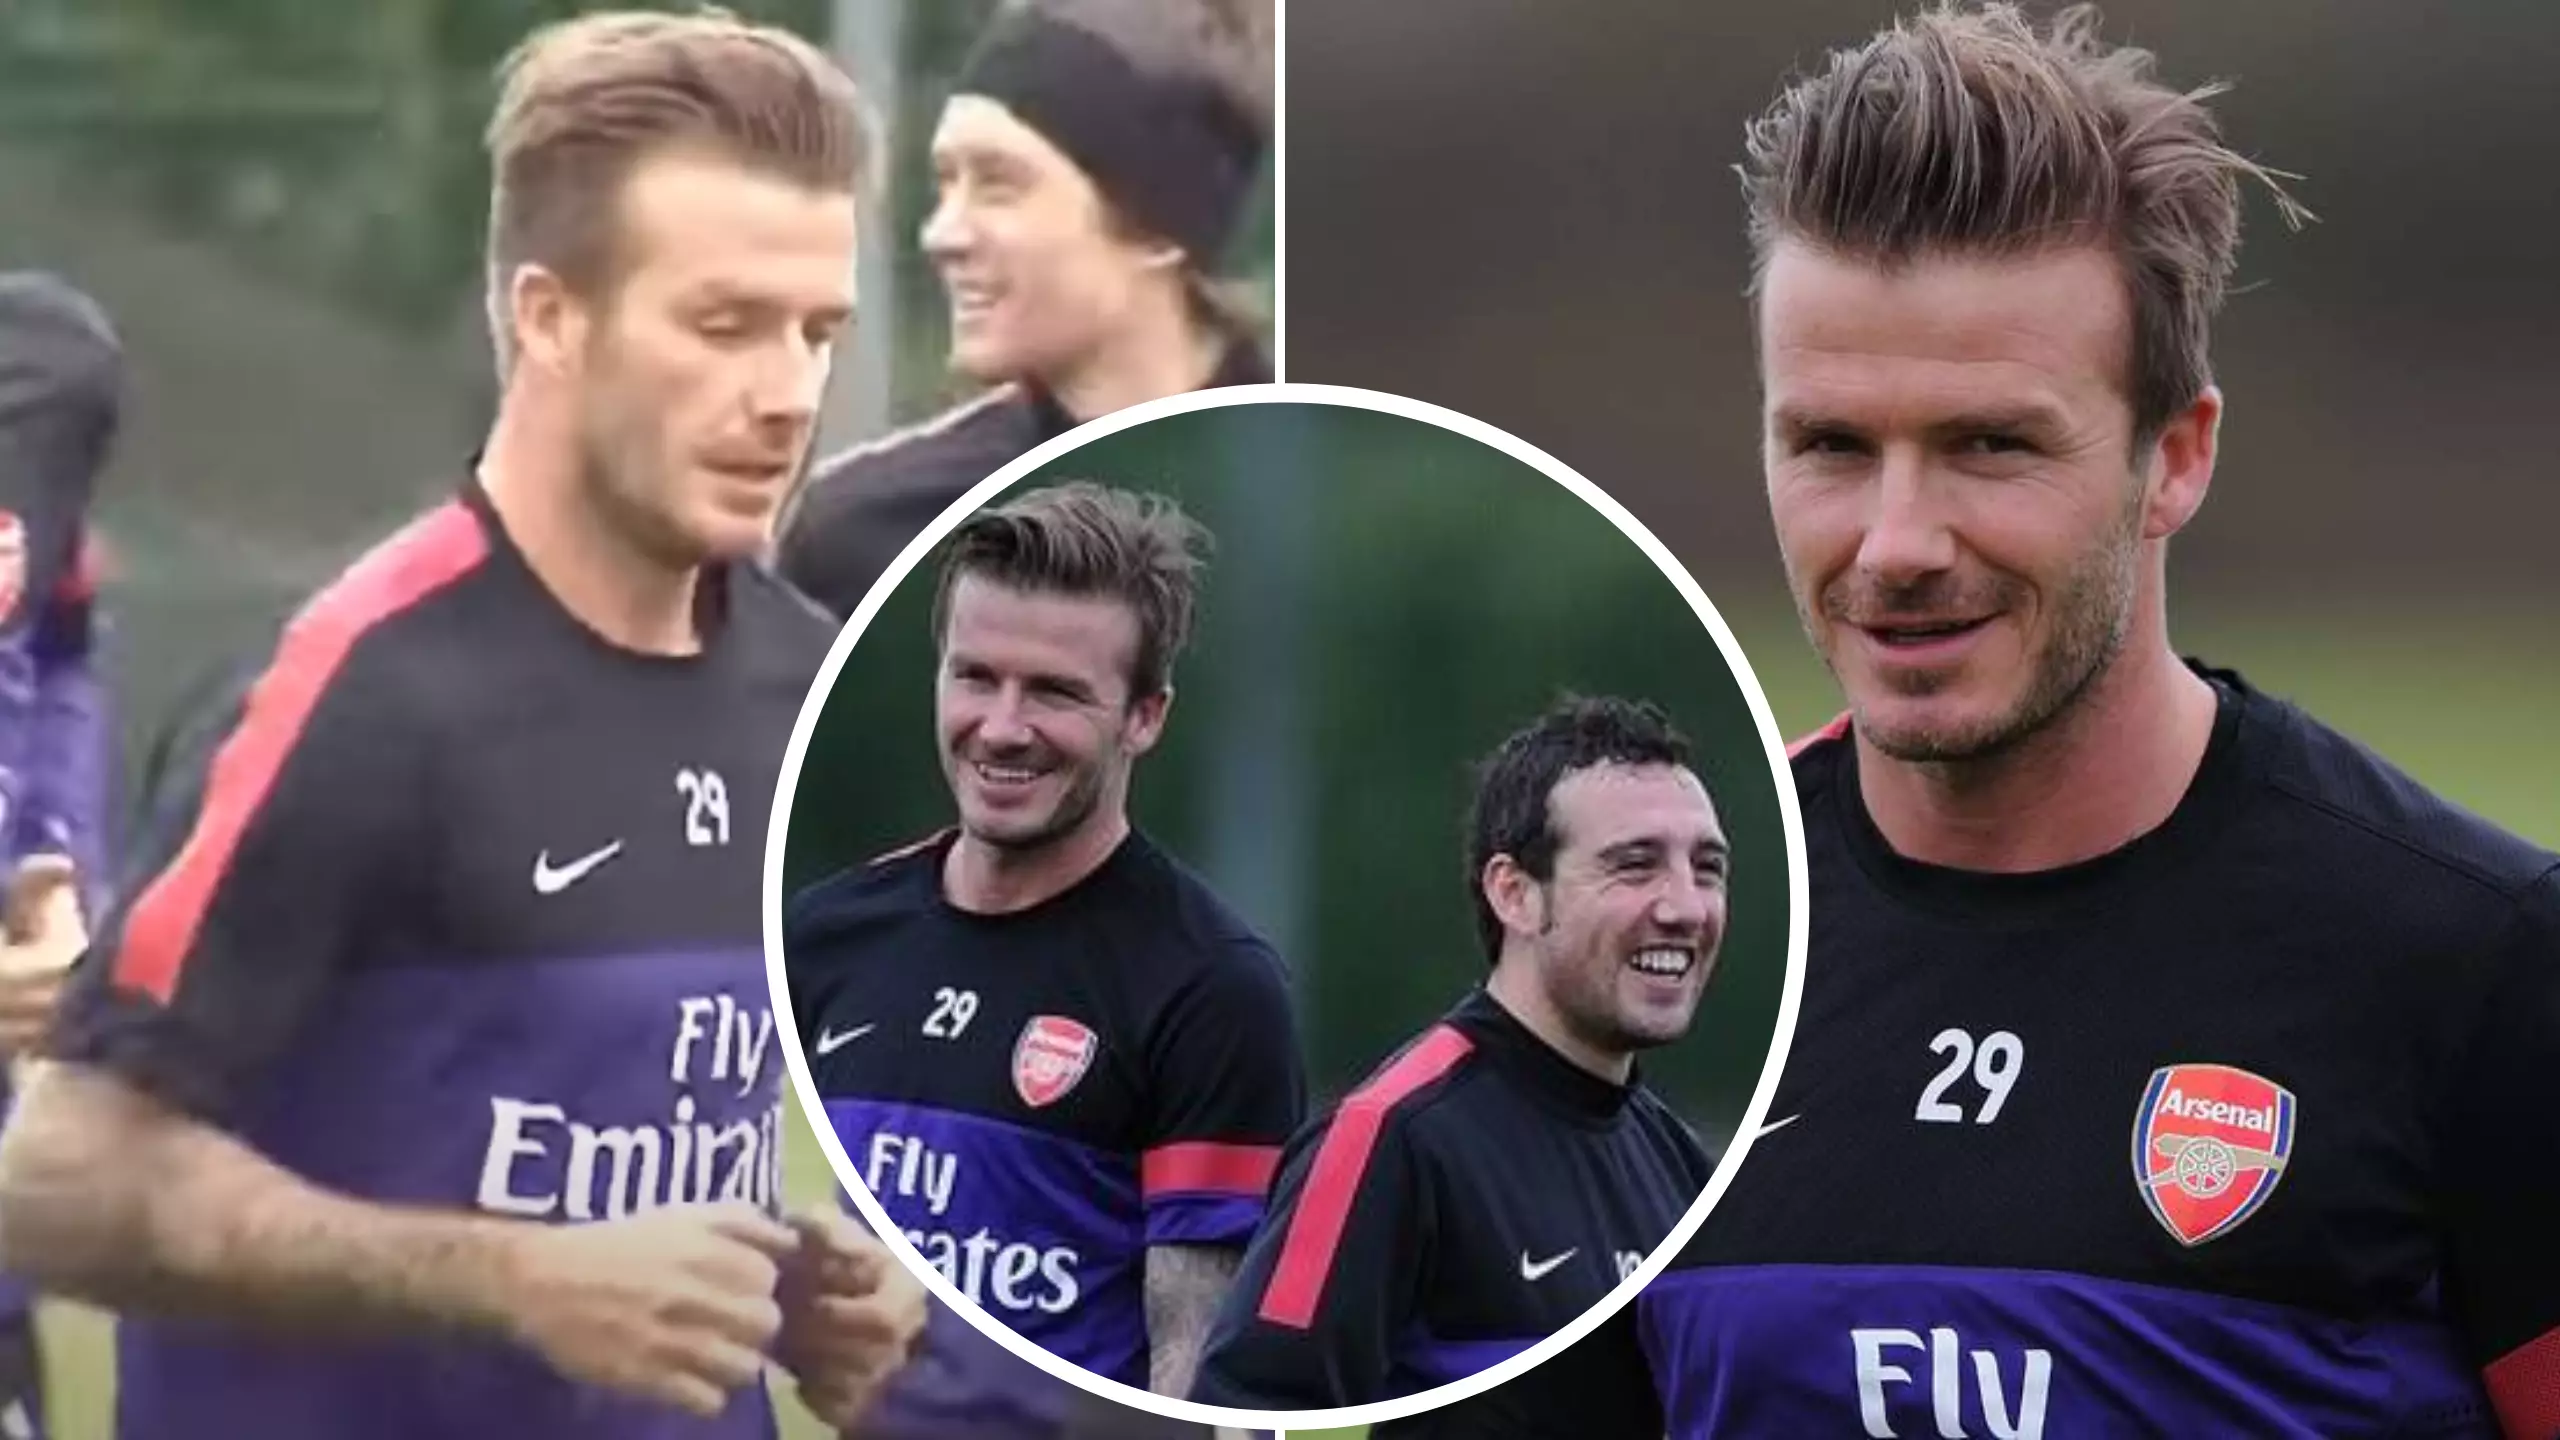 David Beckham Training With Arsenal Is Still The Weirdest Thing Ever